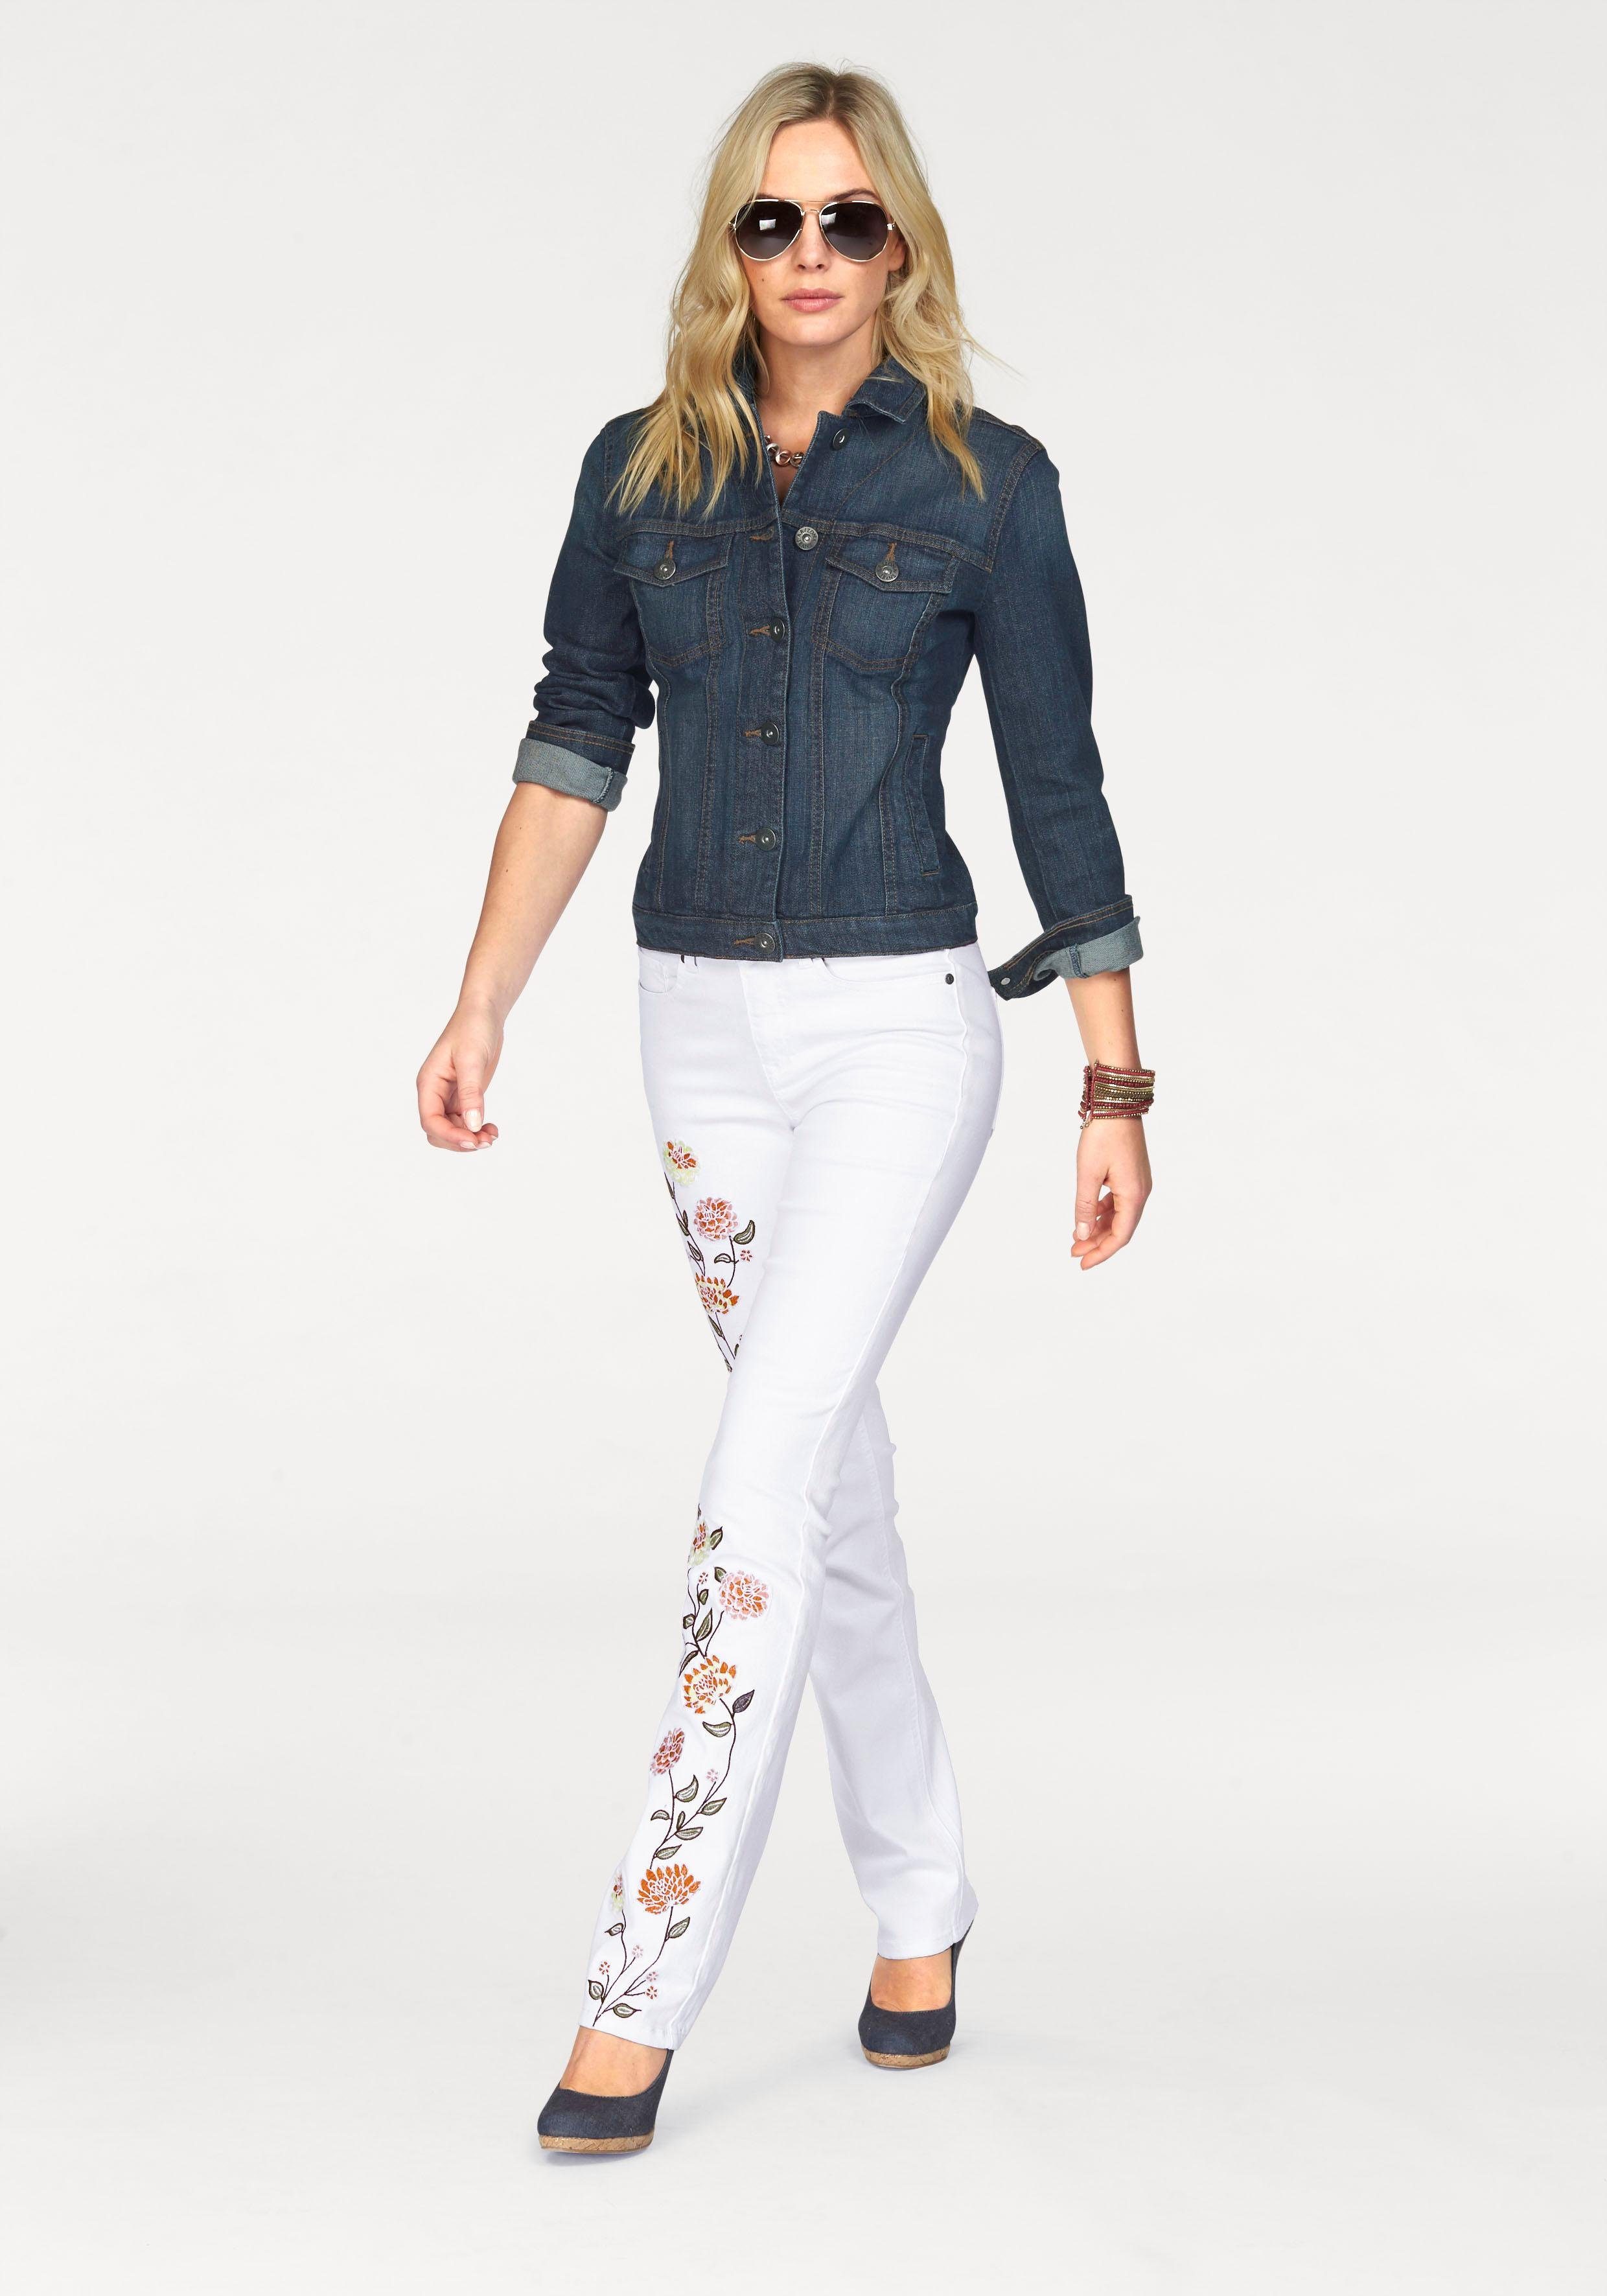 Denim Arizona Jeansjacke aus klassischem Stil im elastischem